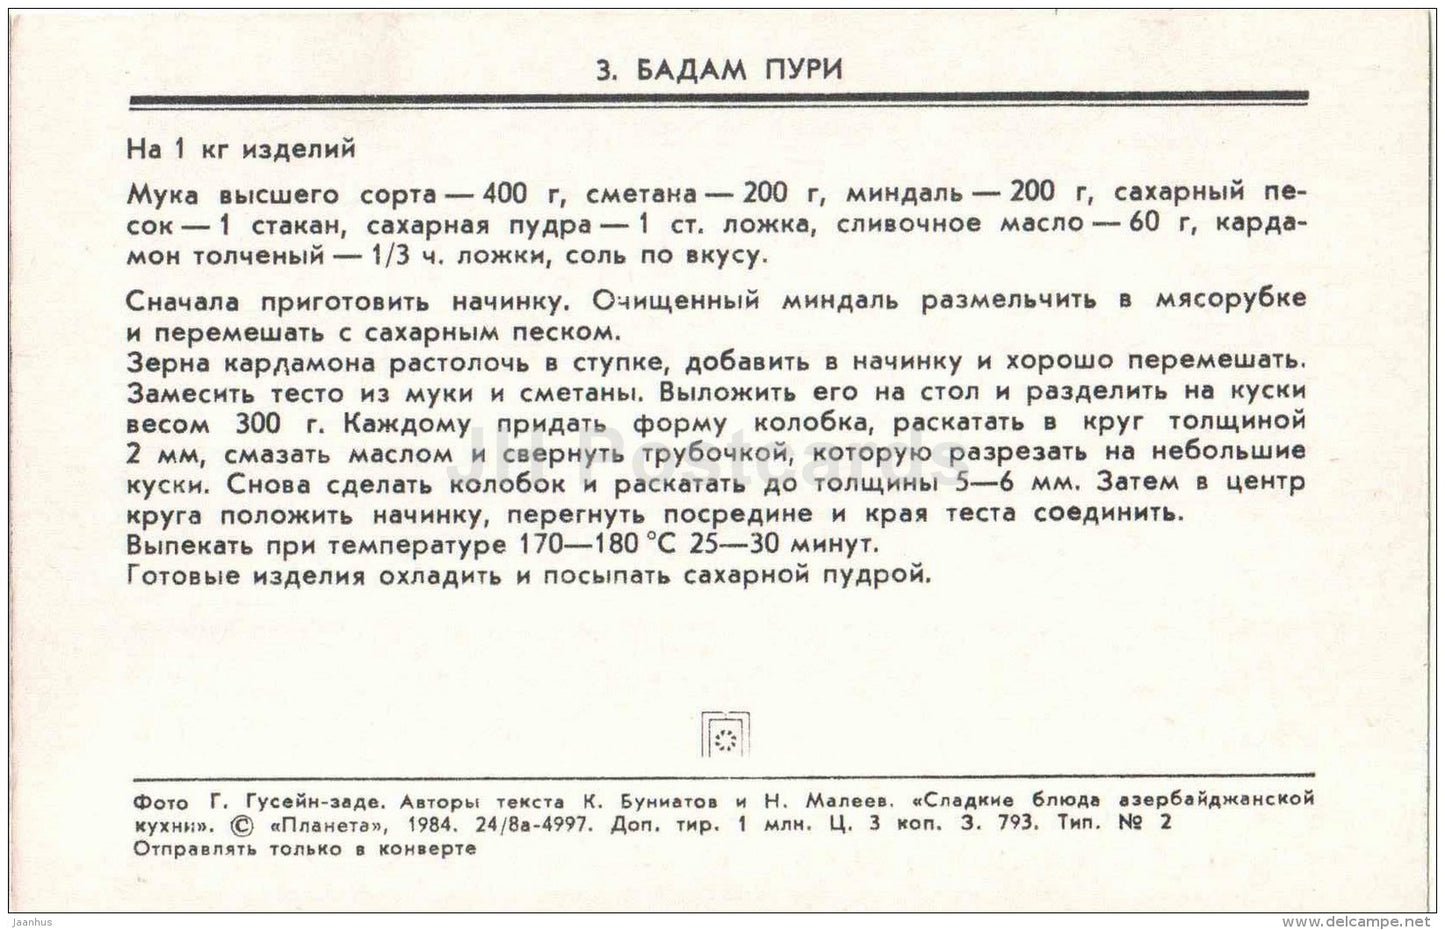 Badam Puri - dishes - Azerbaijan dessert - cuisine - 1984 - Russia USSR - unused - JH Postcards